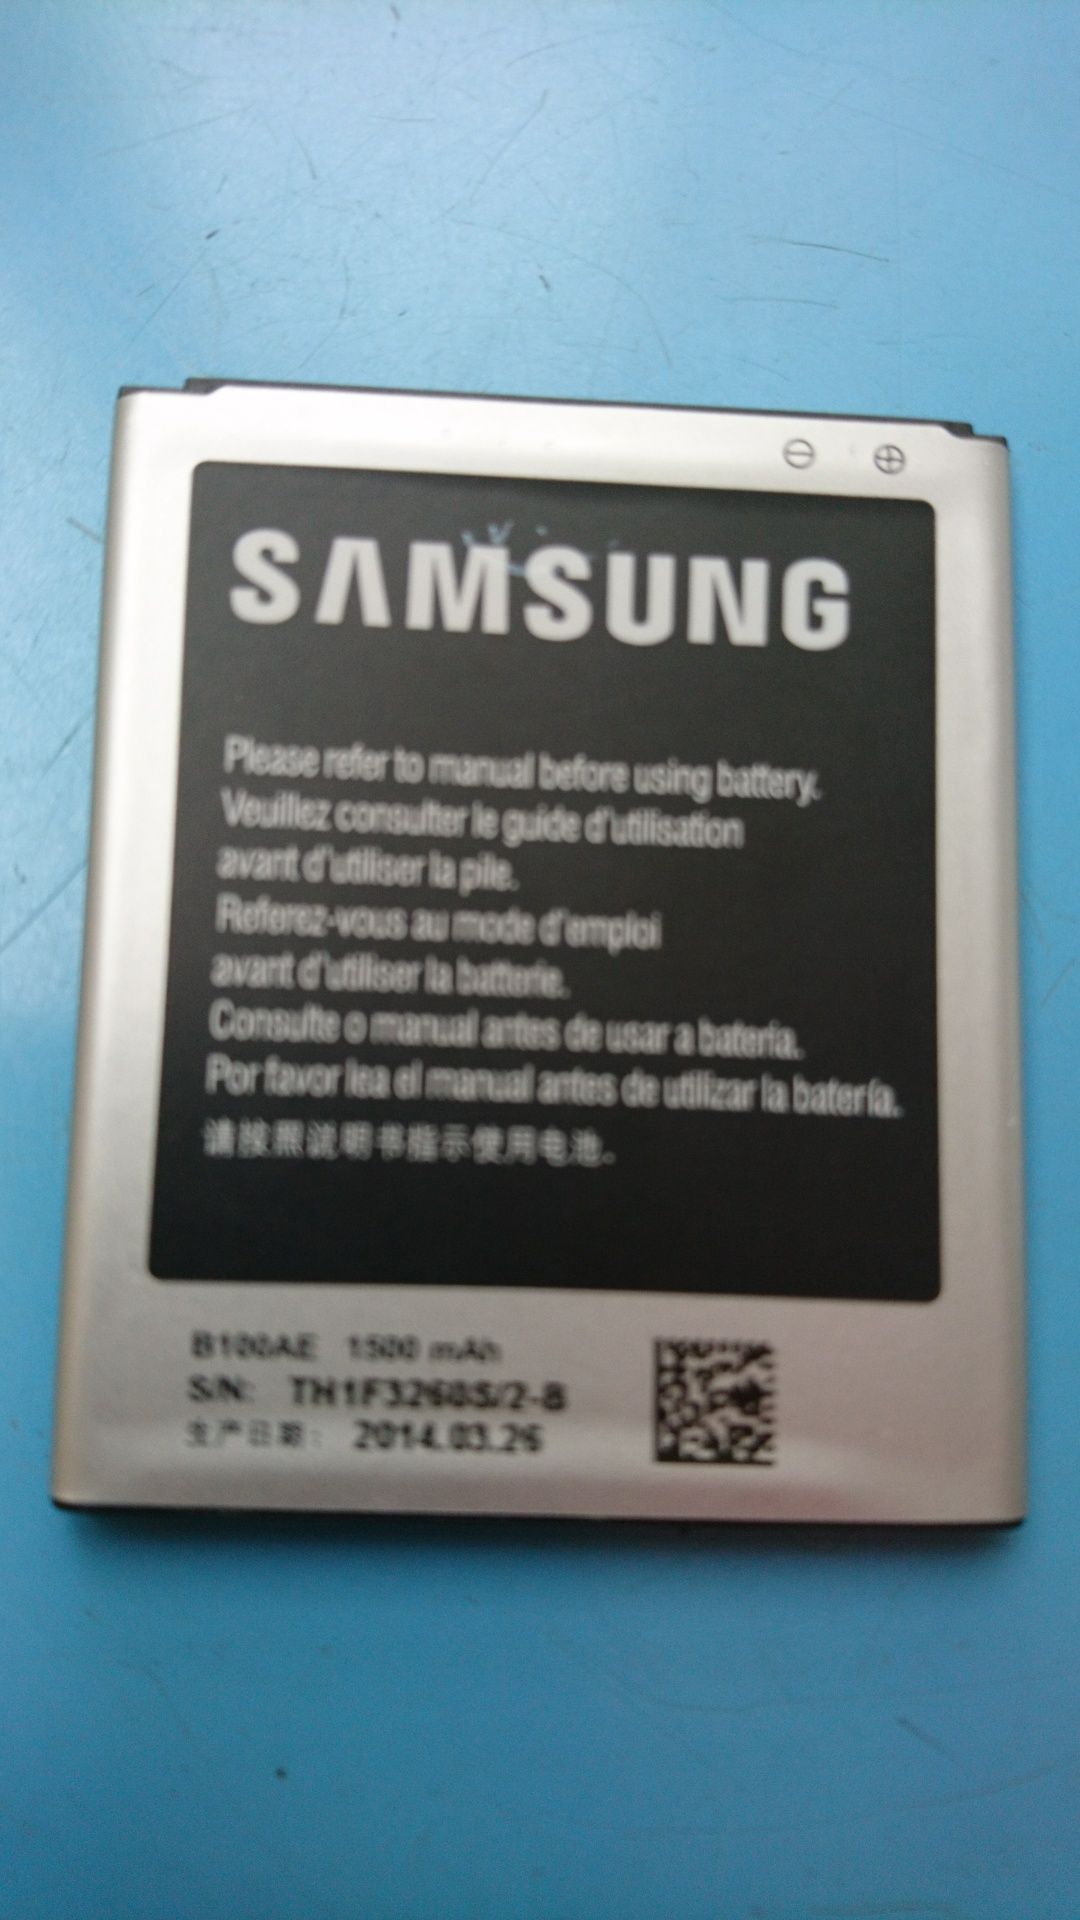 Bateria Samsung B100AE nova